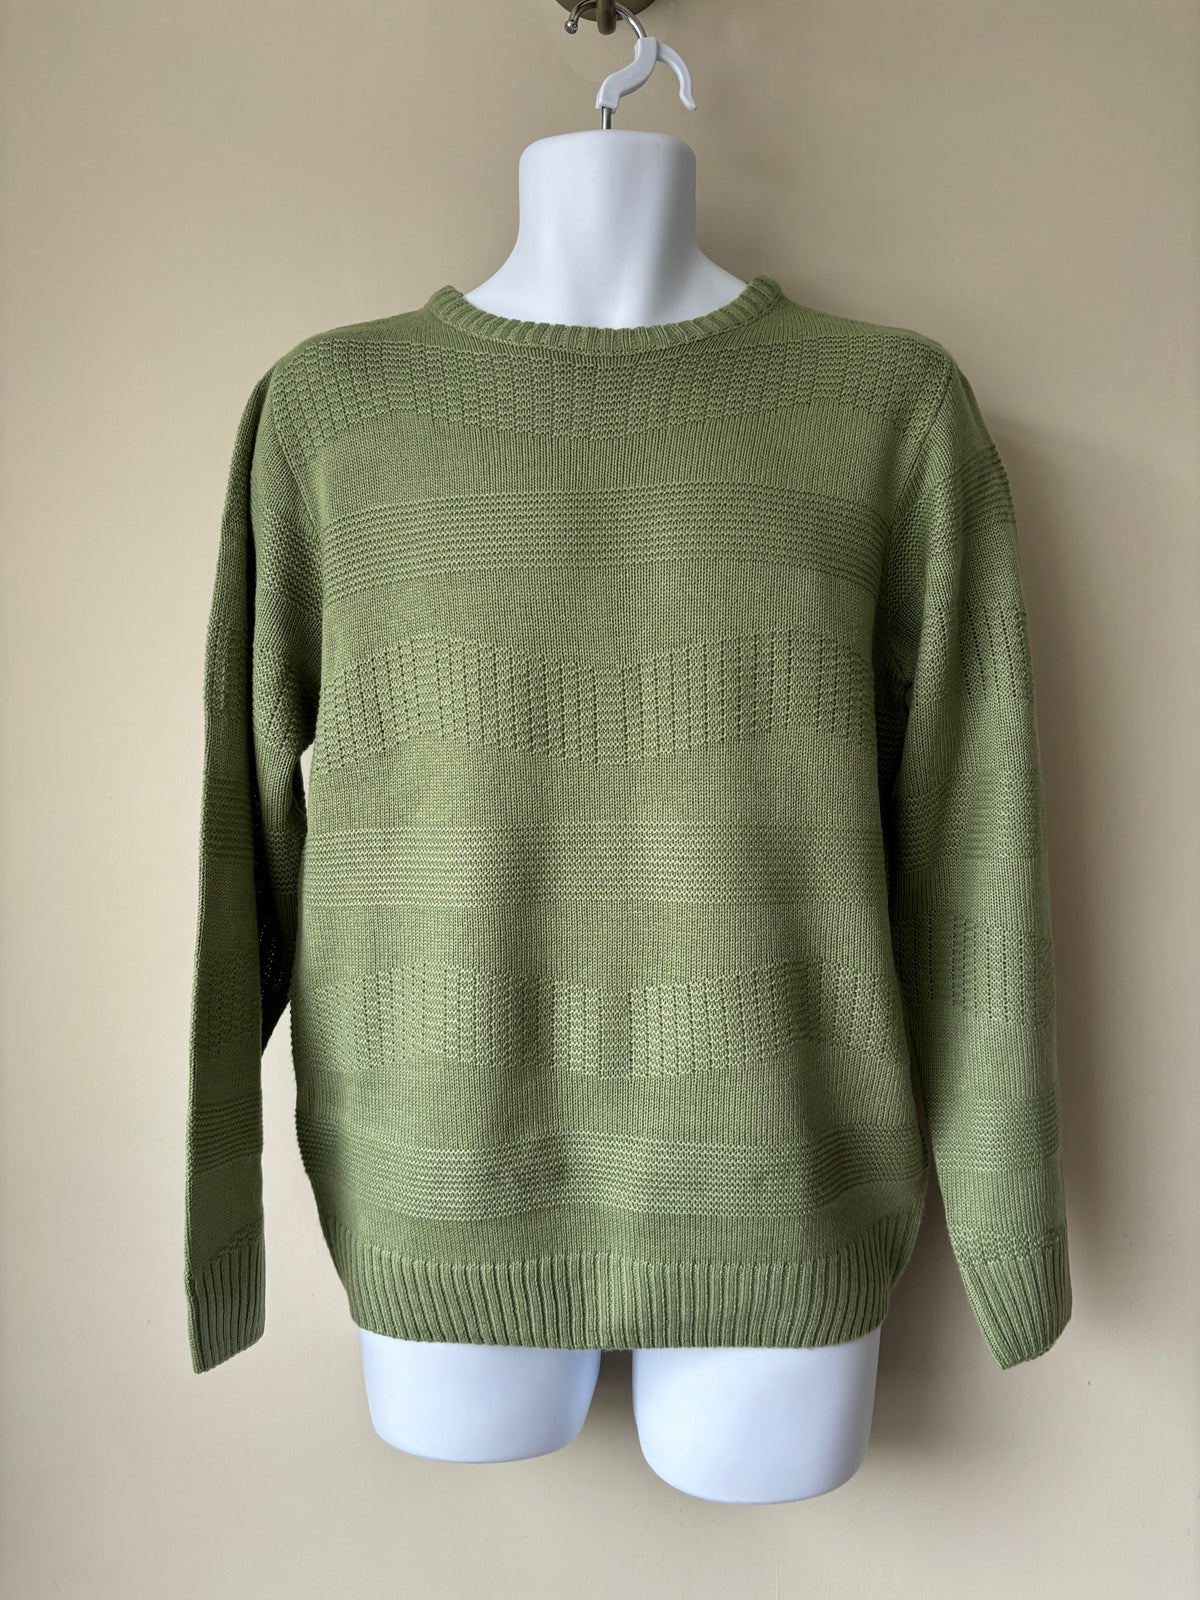 Wave knit jumper in green by Le- Breve Size M Men’s